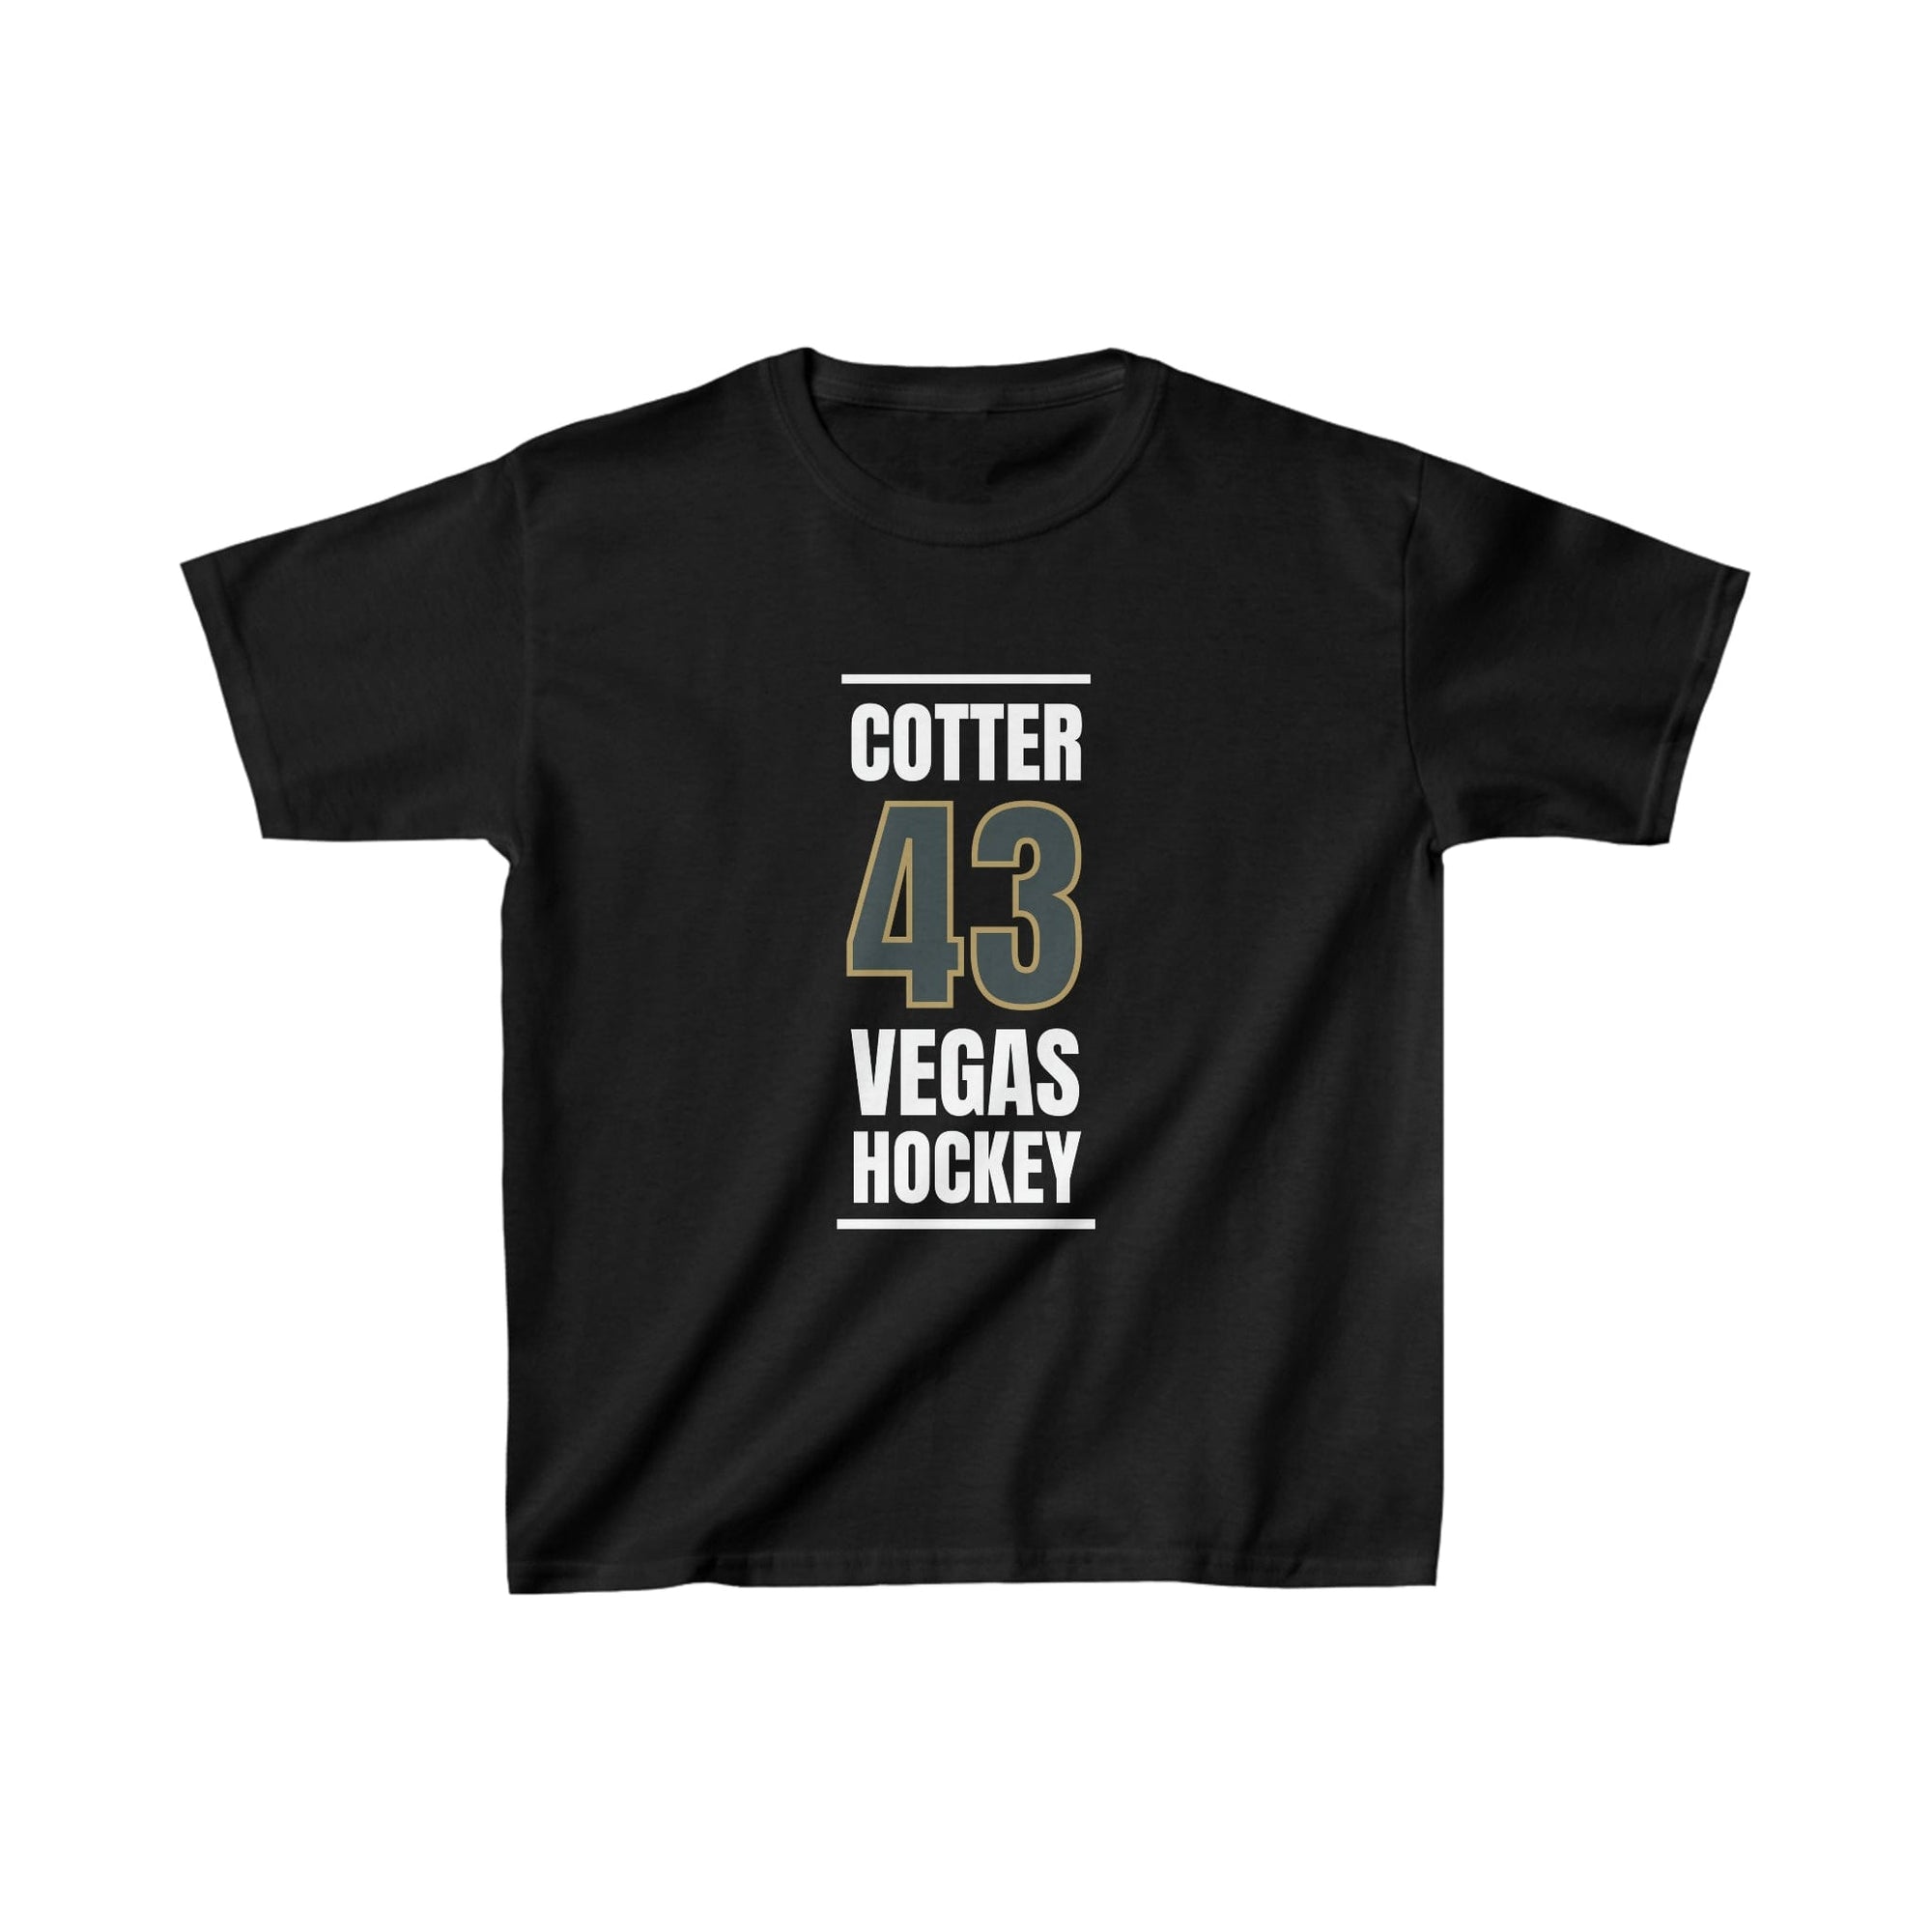 Kids clothes Cotter 43 Vegas Hockey Steel Gray Vertical Design Kids Tee